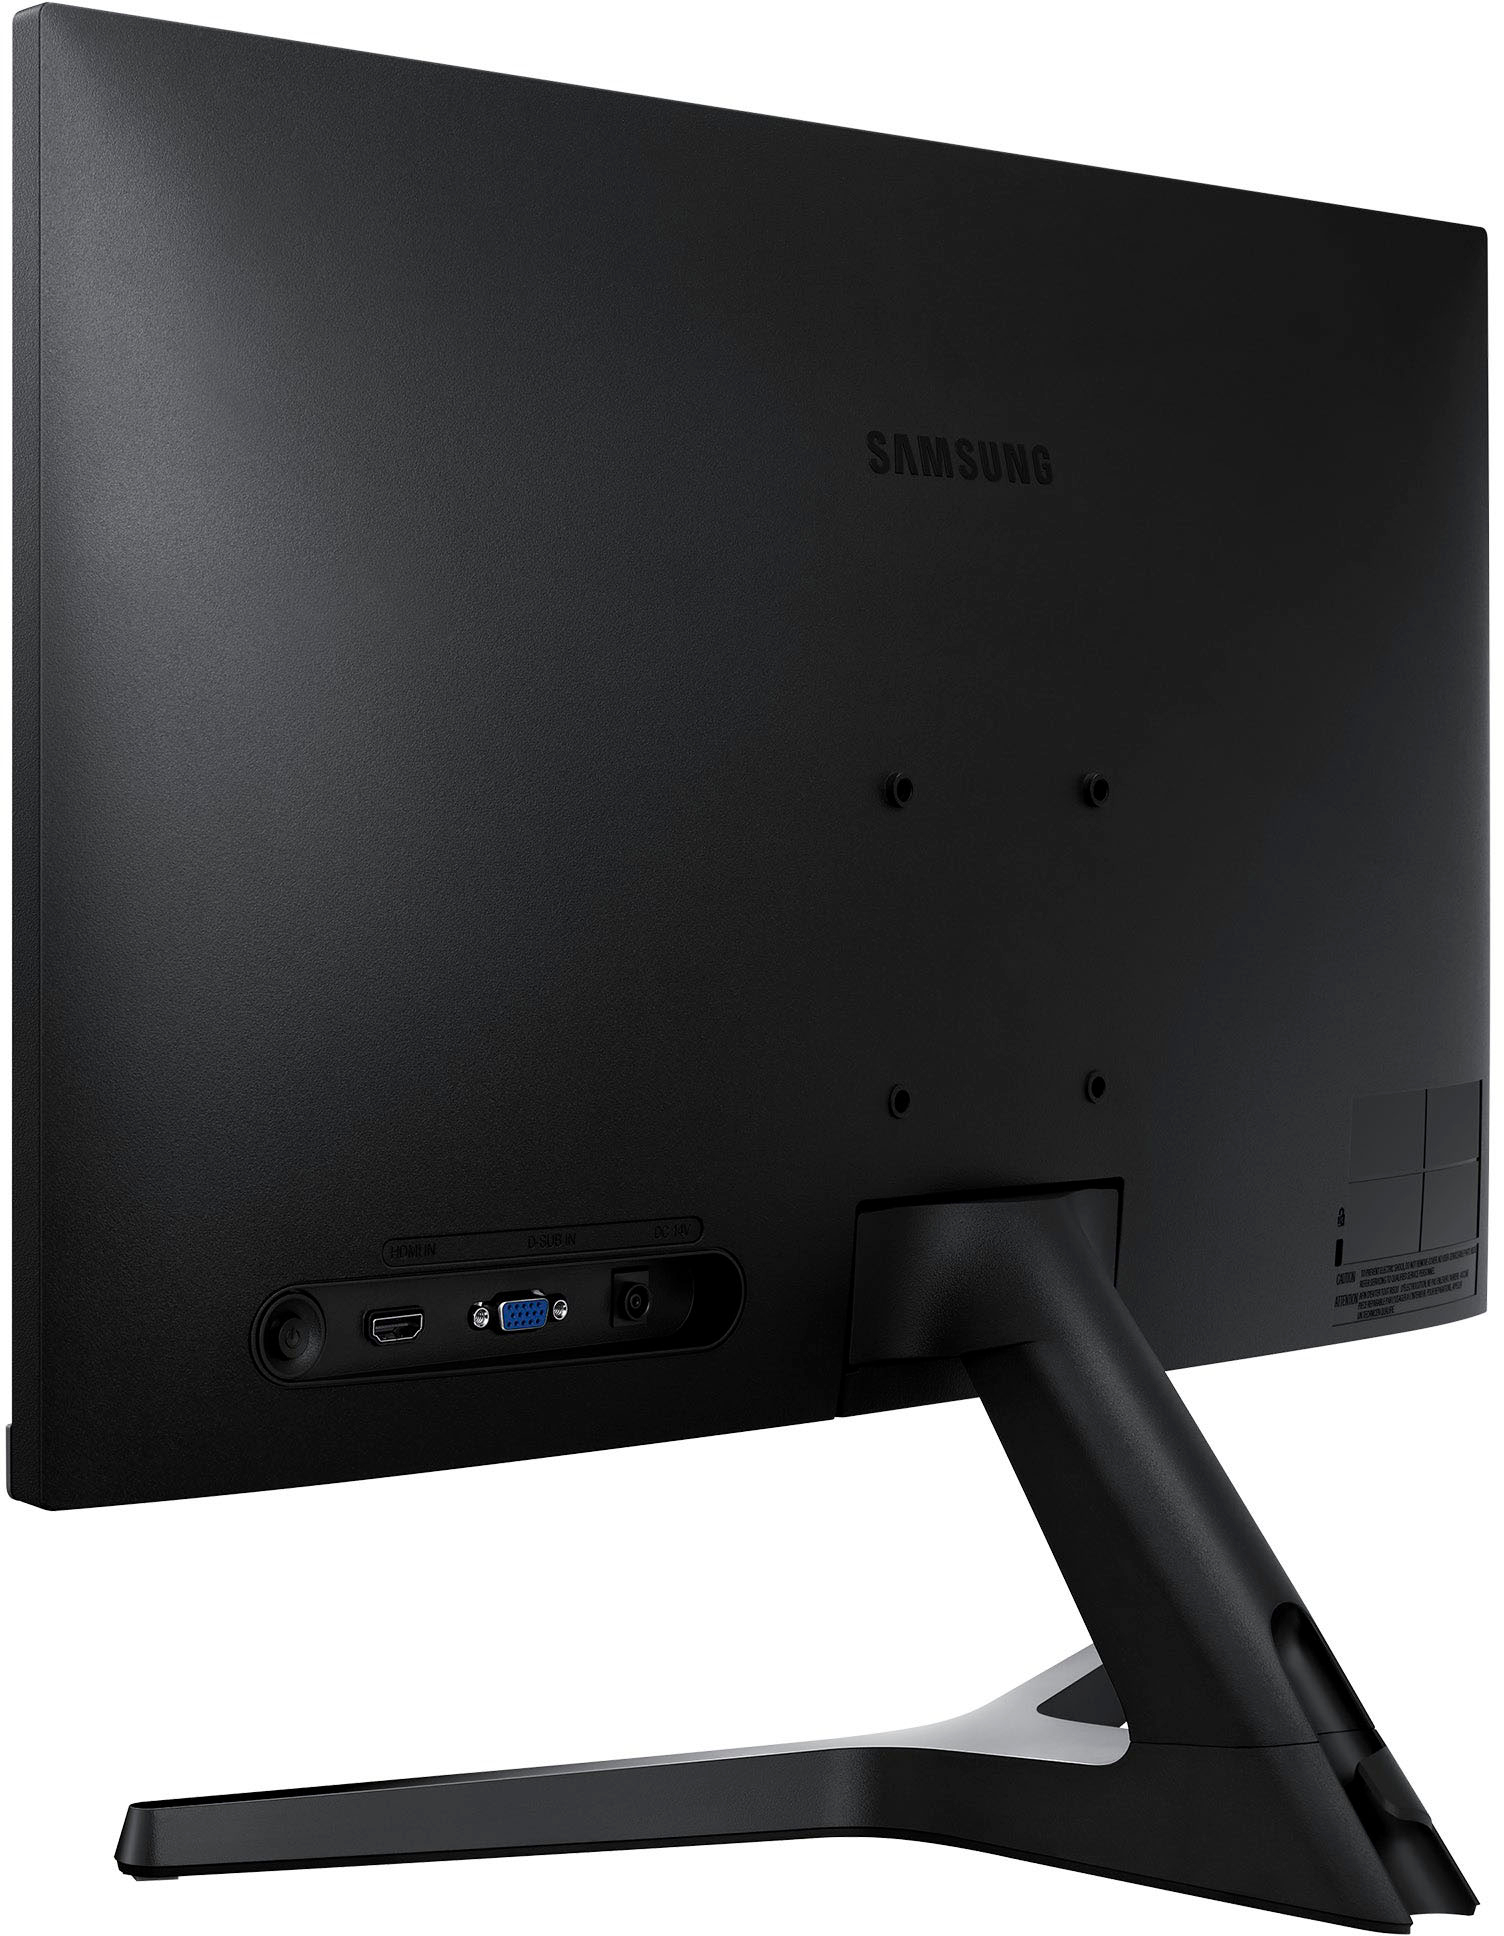 Best Buy: Samsung 24" LED AMD FreeSync Monitor bezel-less design (HDMI, D-sub)